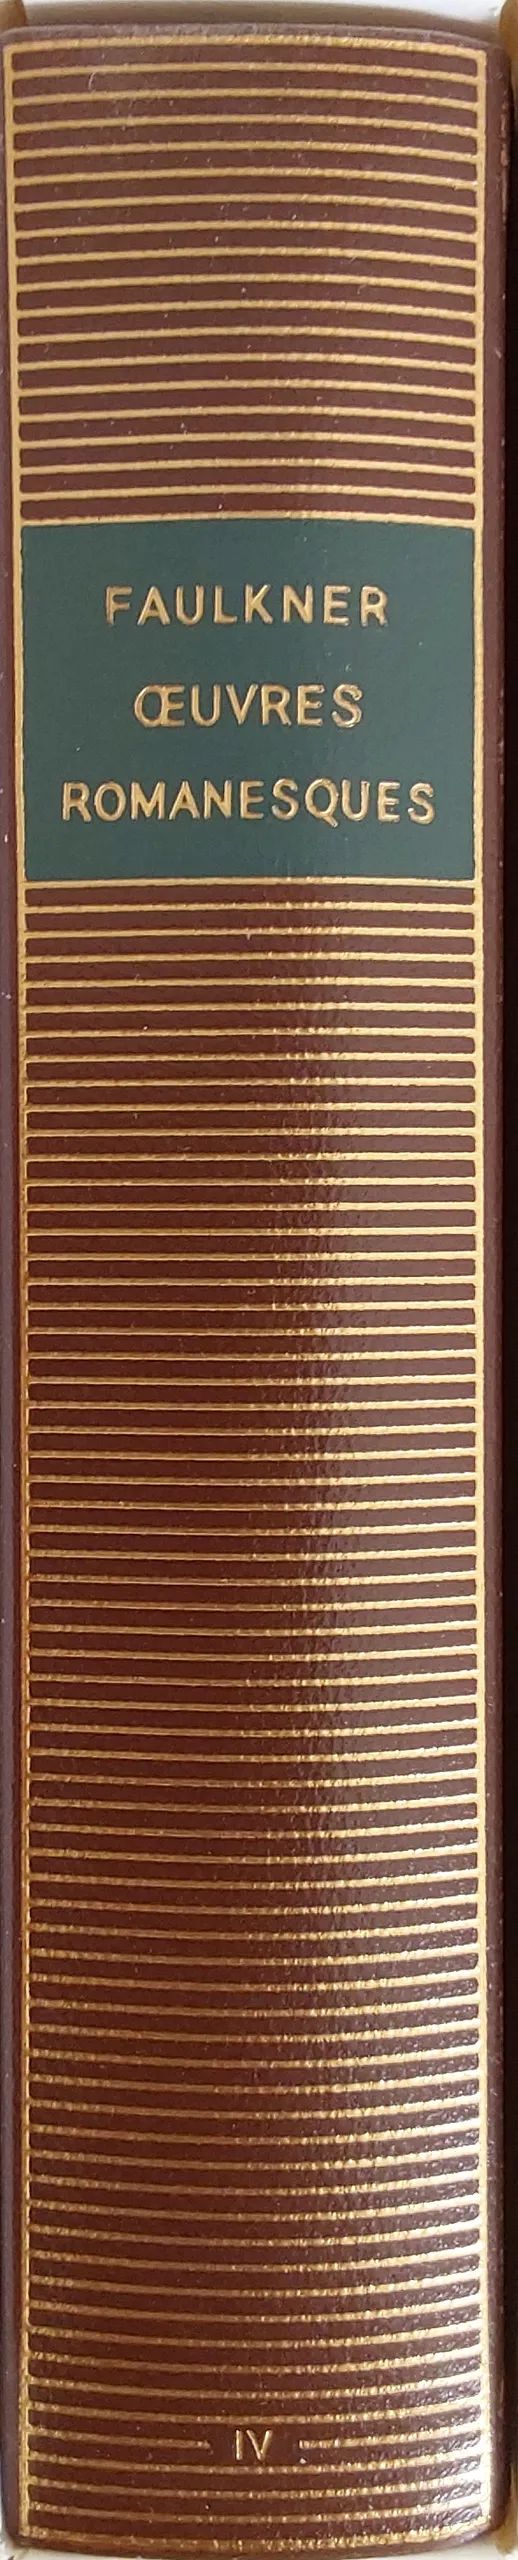 Volume 535 de Faulkner dans la Bibliothèque de la Pléiade